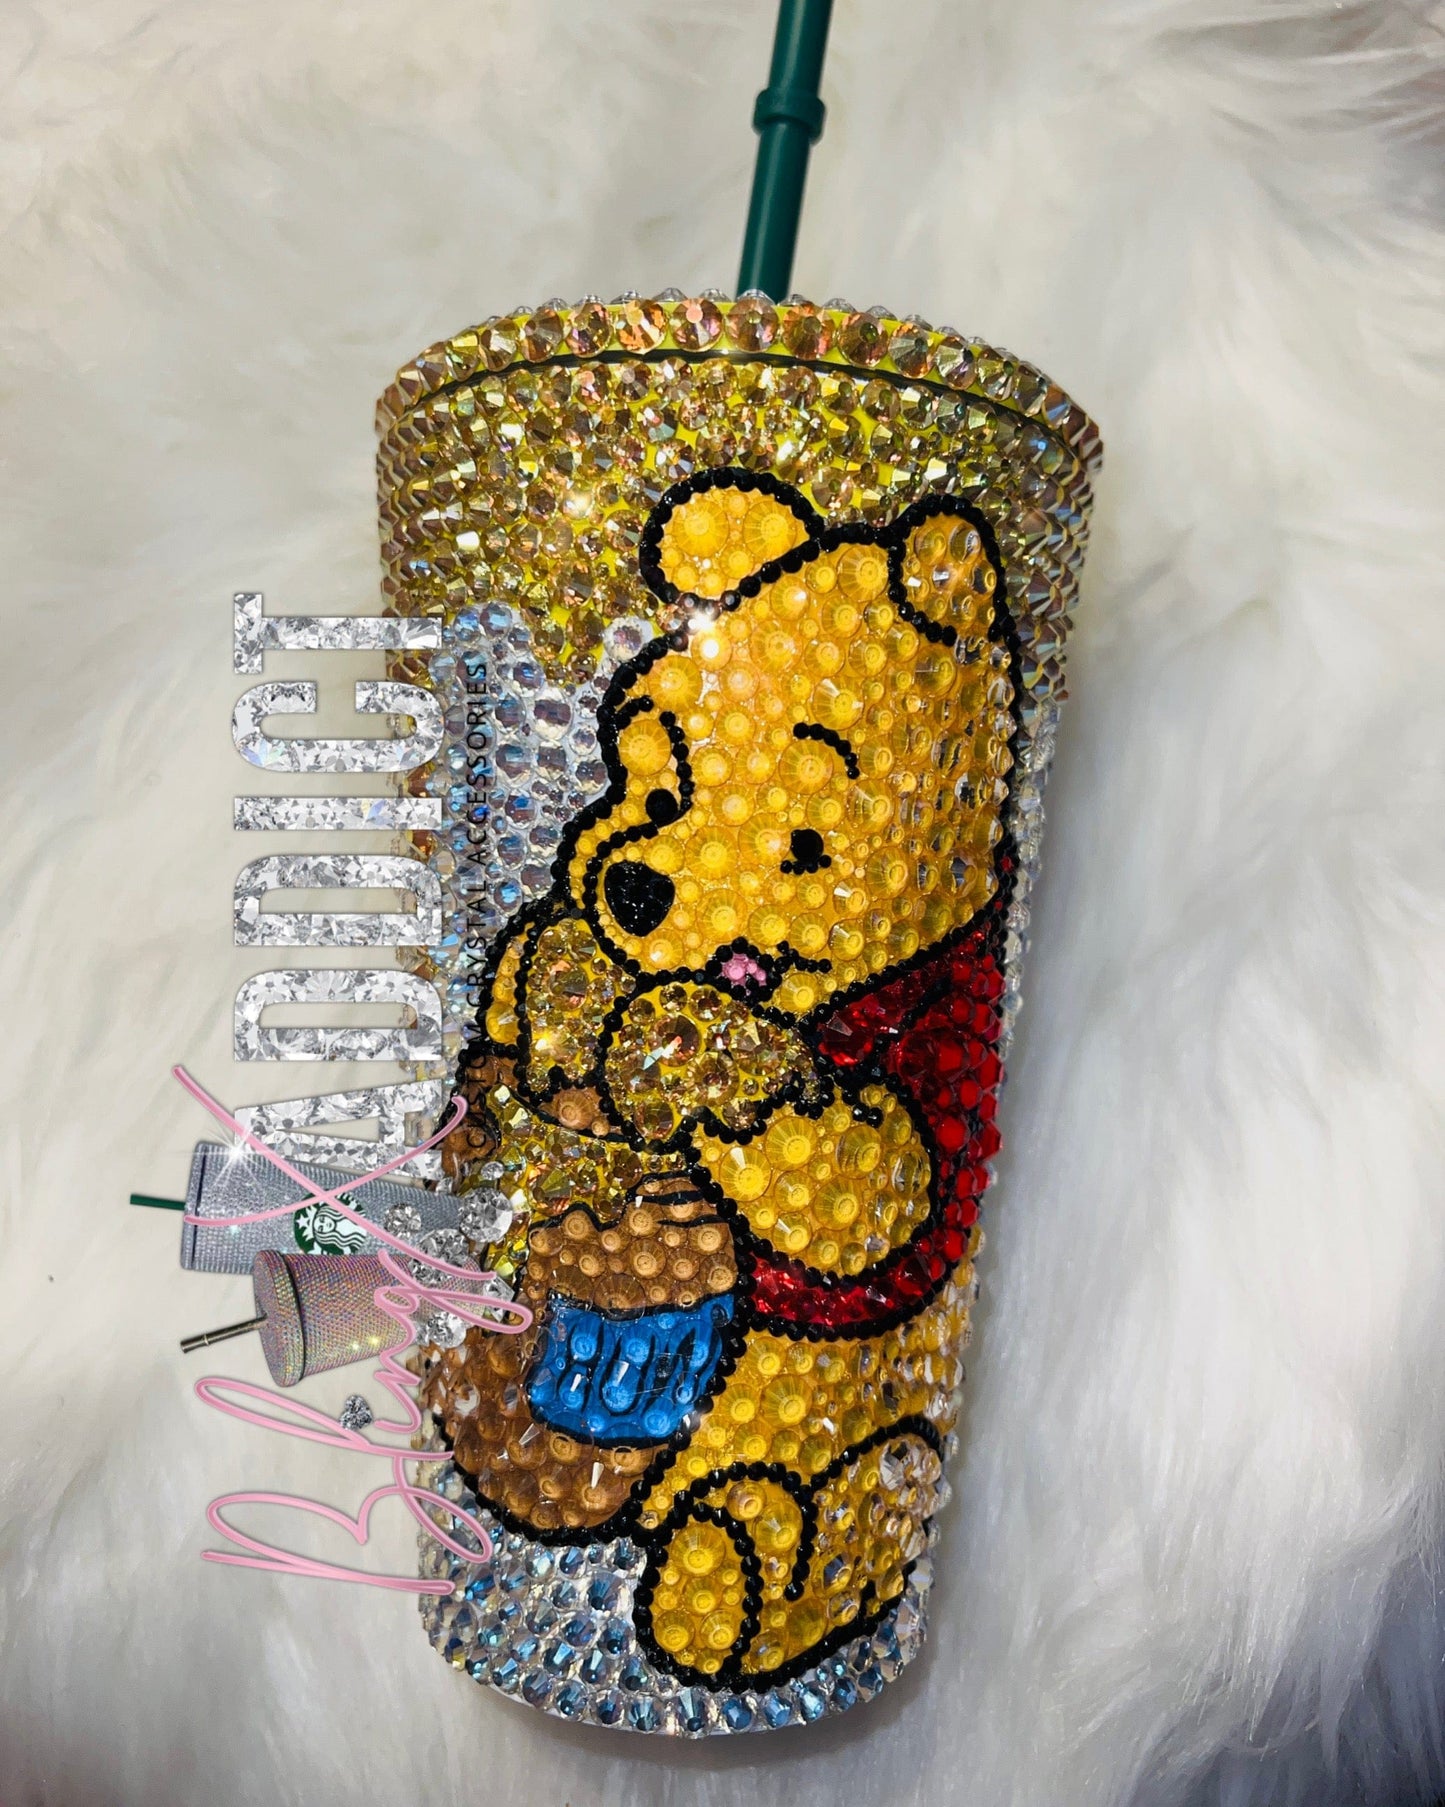 Design: Winnie The Pooh Starbucks Bling Tumbler Cup 16oz Yes by Bling Addict | BlingxAddict